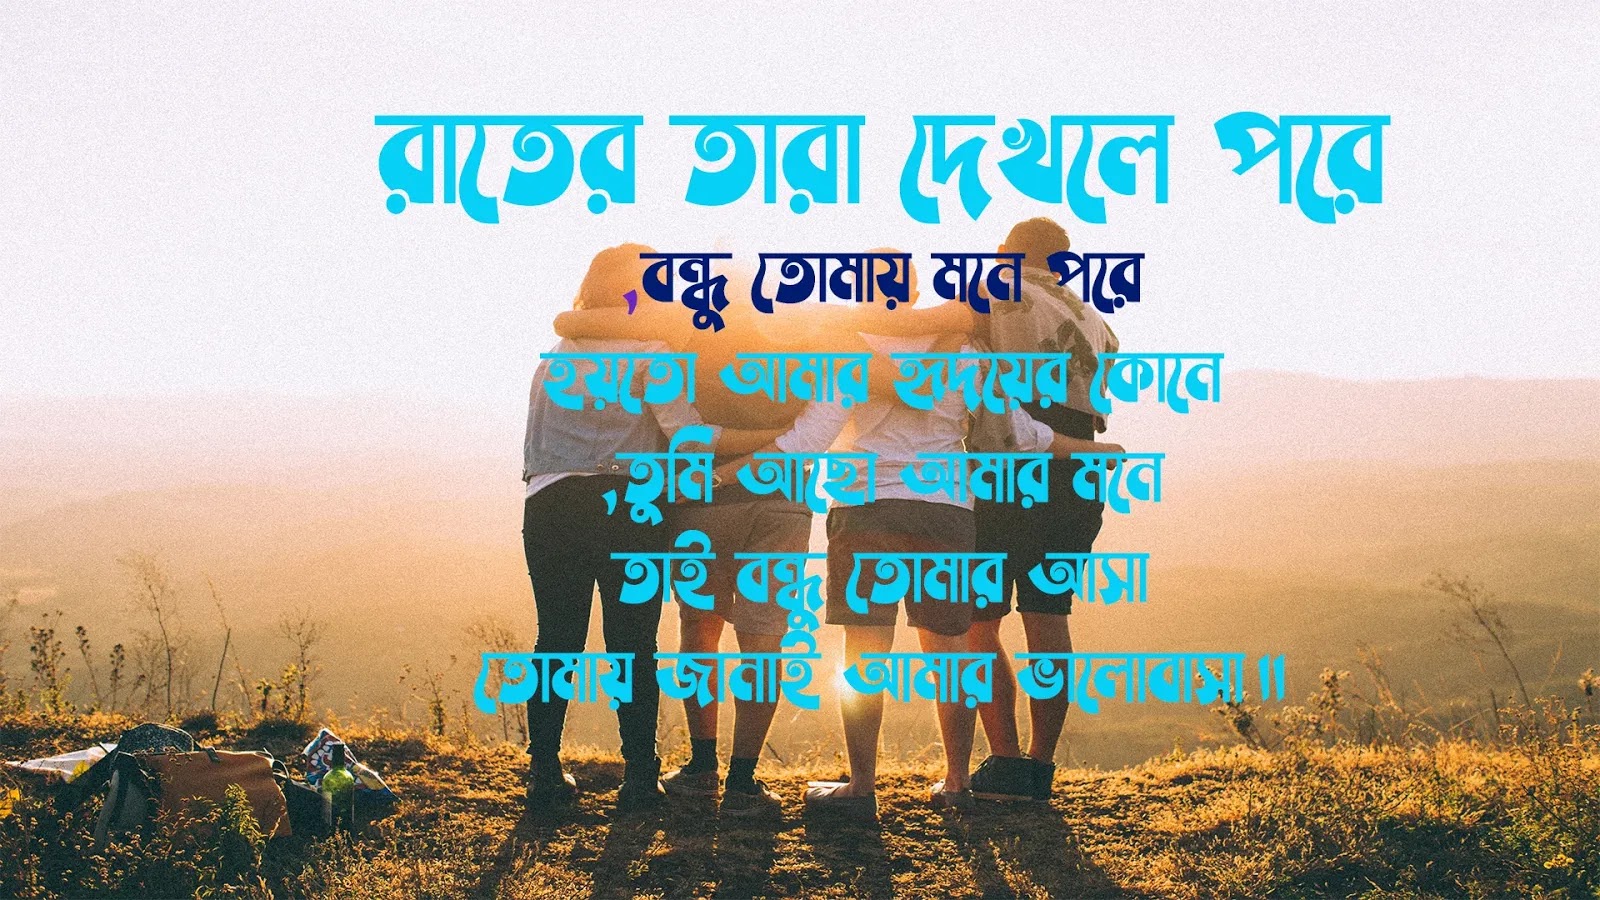 bengali friendship quotes images